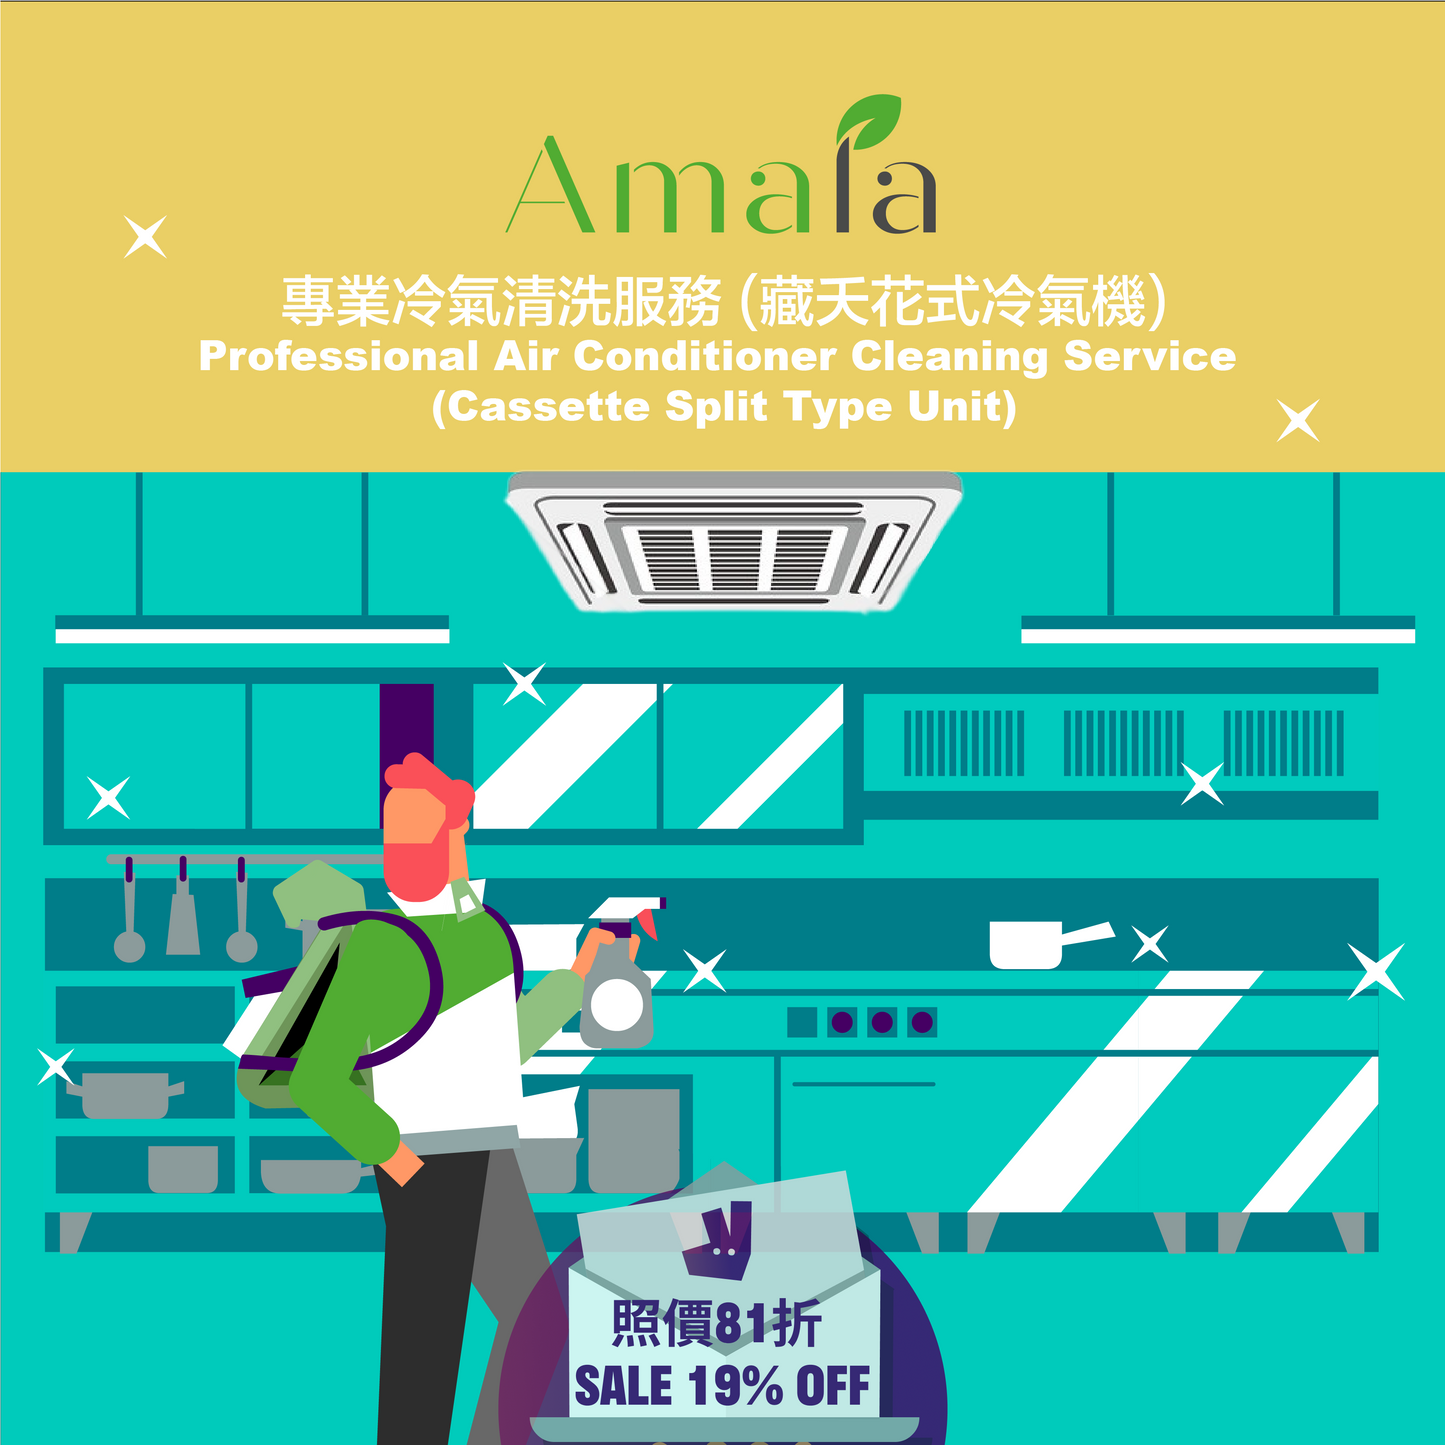 Amala 專業冷氣清洗服務 (藏天花式冷氣機) Amala Professional Air Conditioner Cleaning Service(Cassette Split Type Unit)